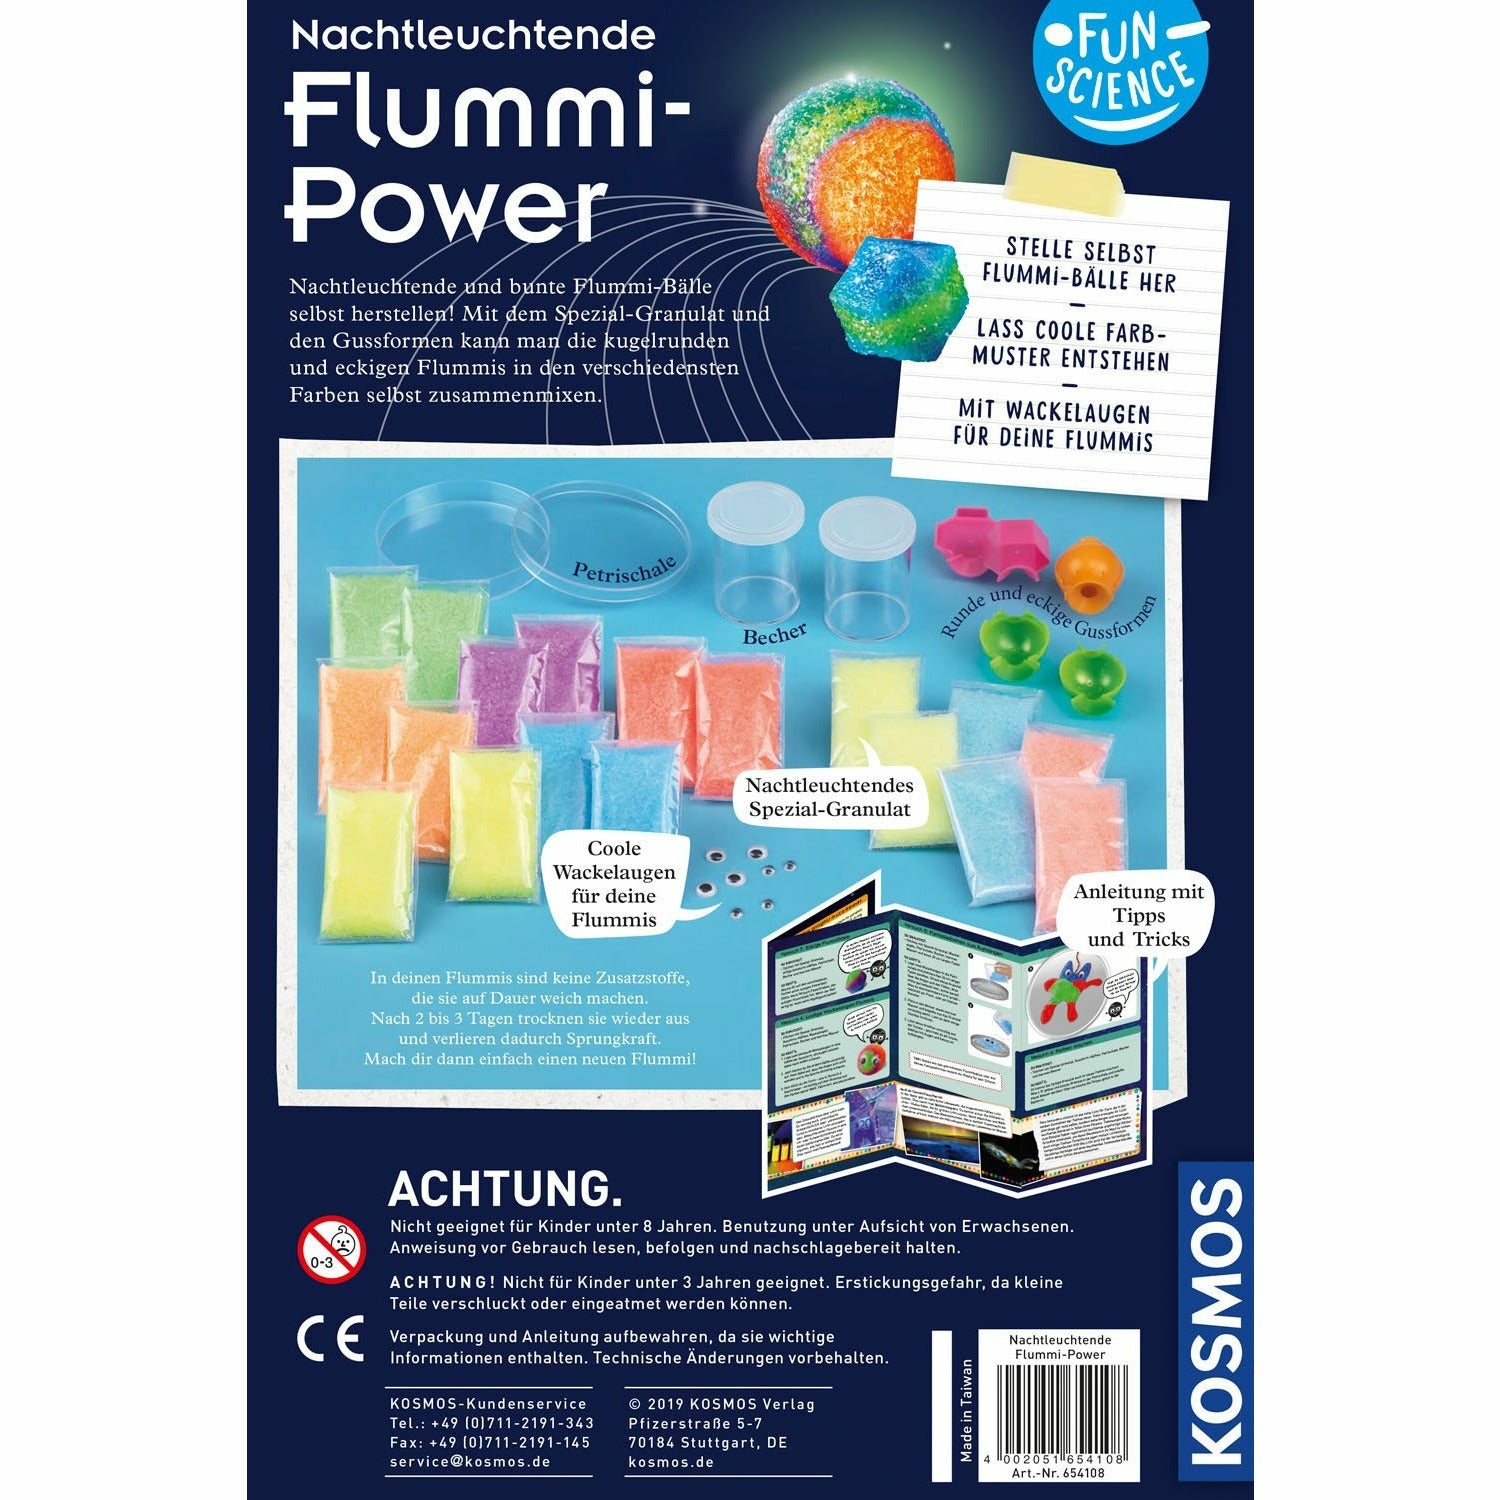 KOSMOS | Fun Science Nachtleuchtende Flummi-Power